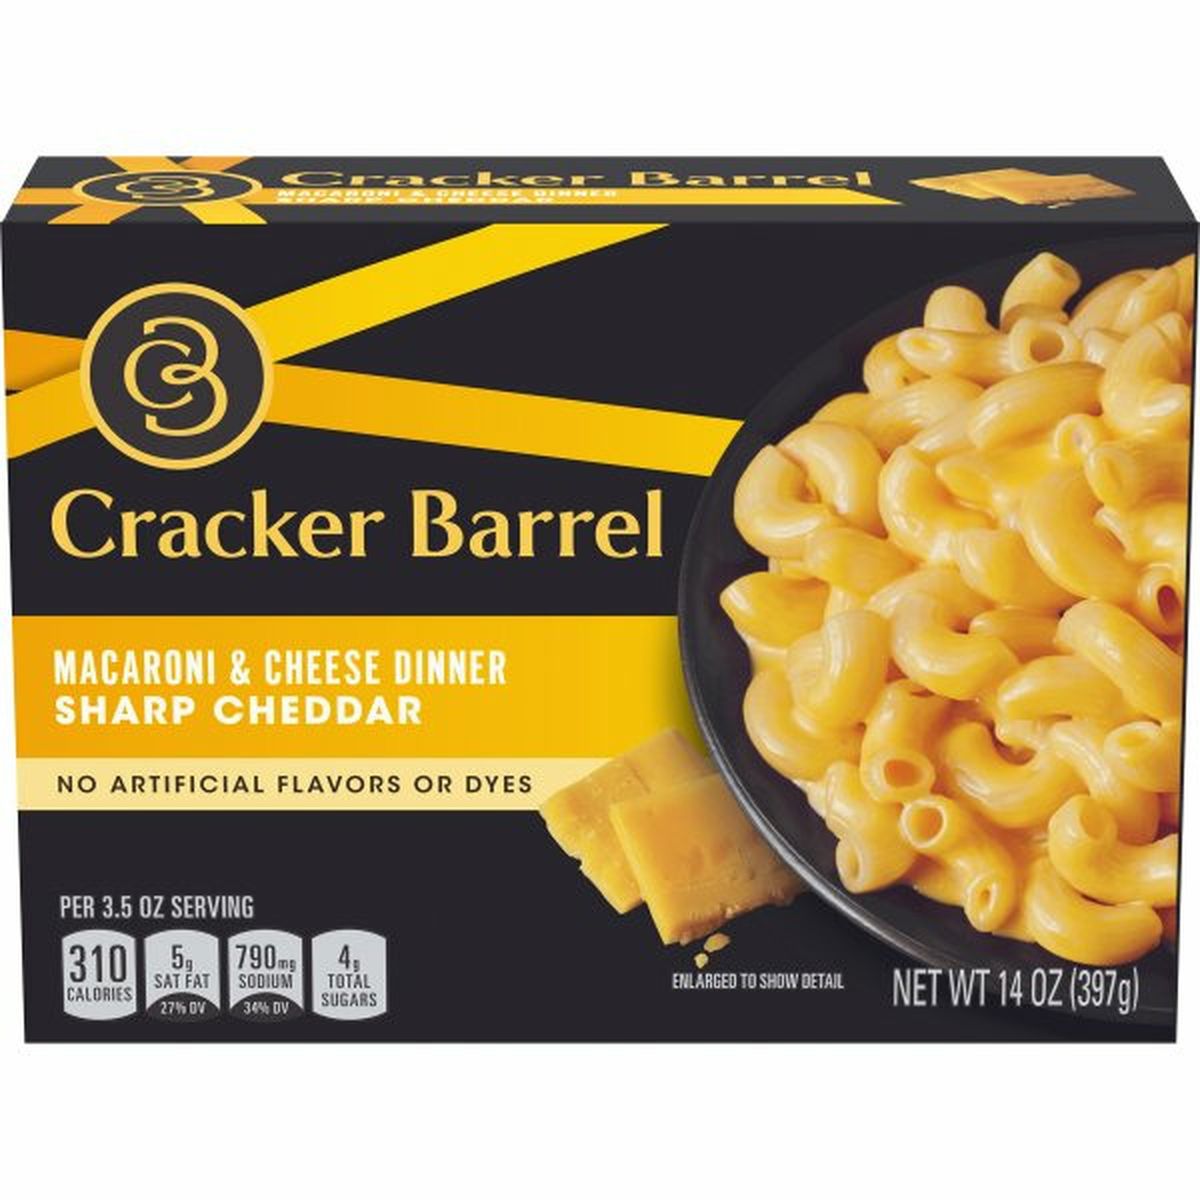 Calories in Cracker Barrel Sharp Cheddar Macaroni & Cheese Dinner